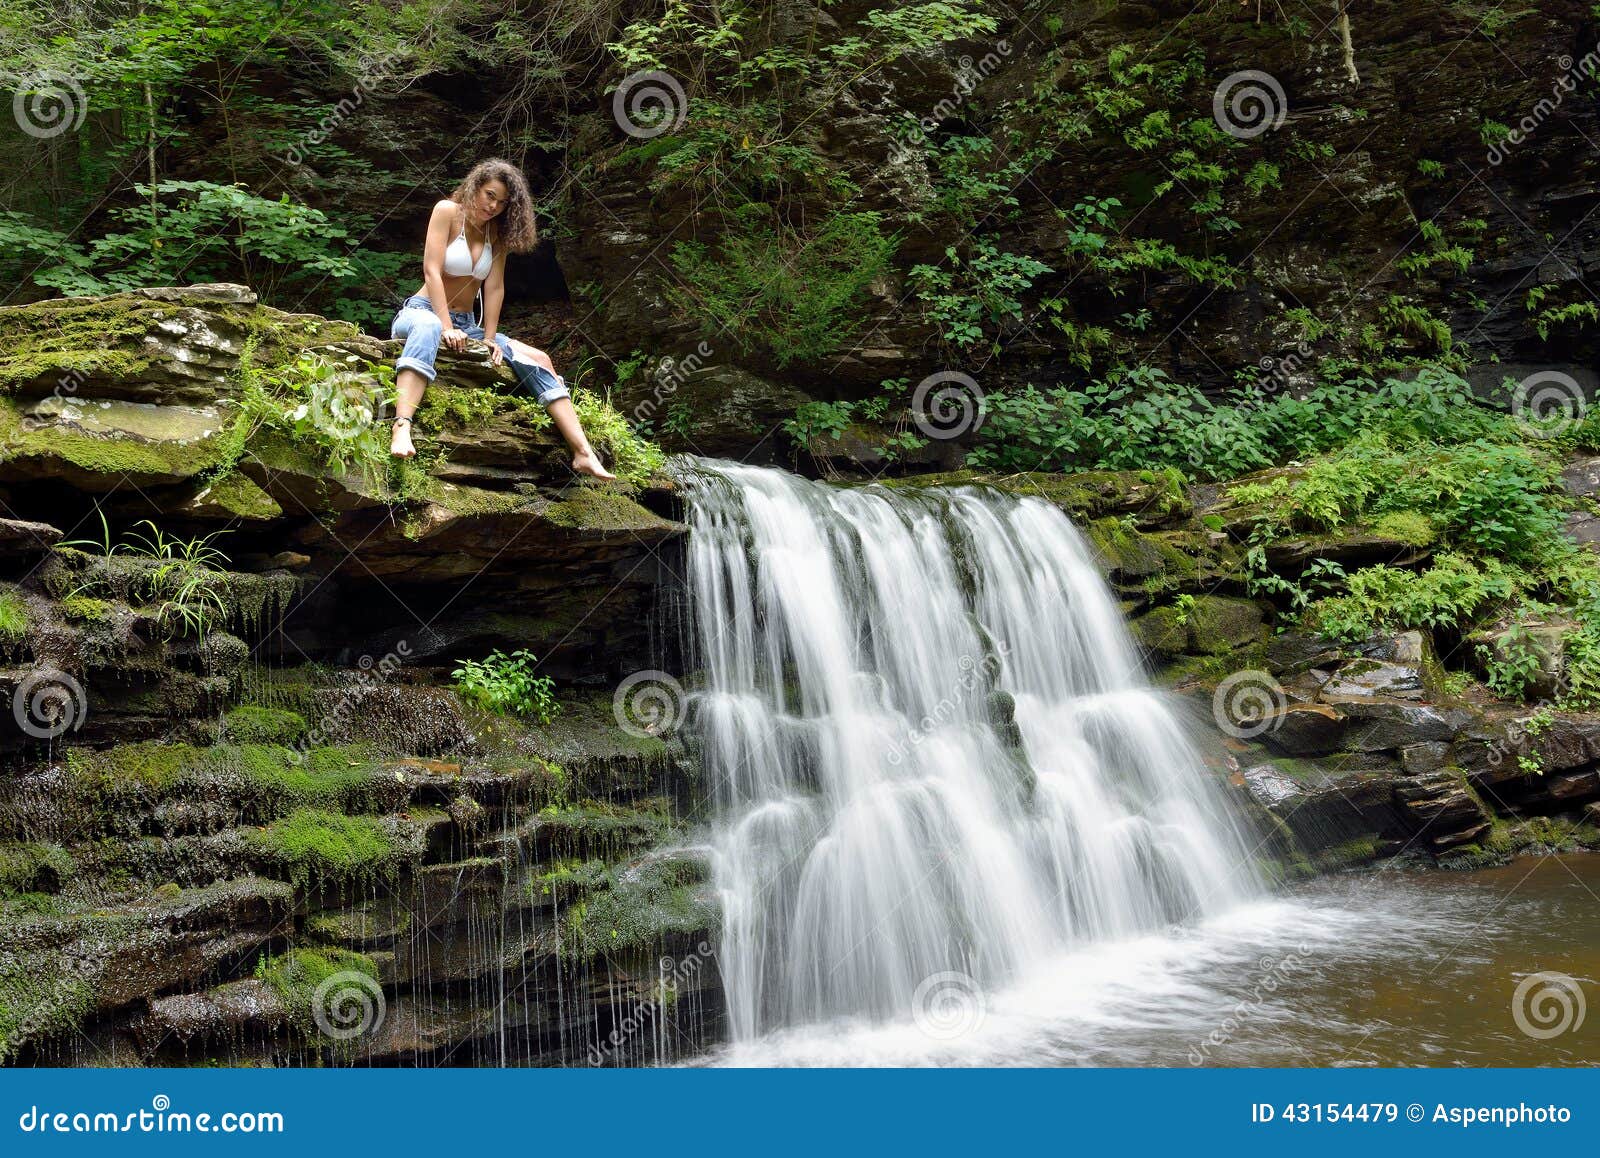 Beautiful Woman Outdoors - Next To Waterfall Stock Image 